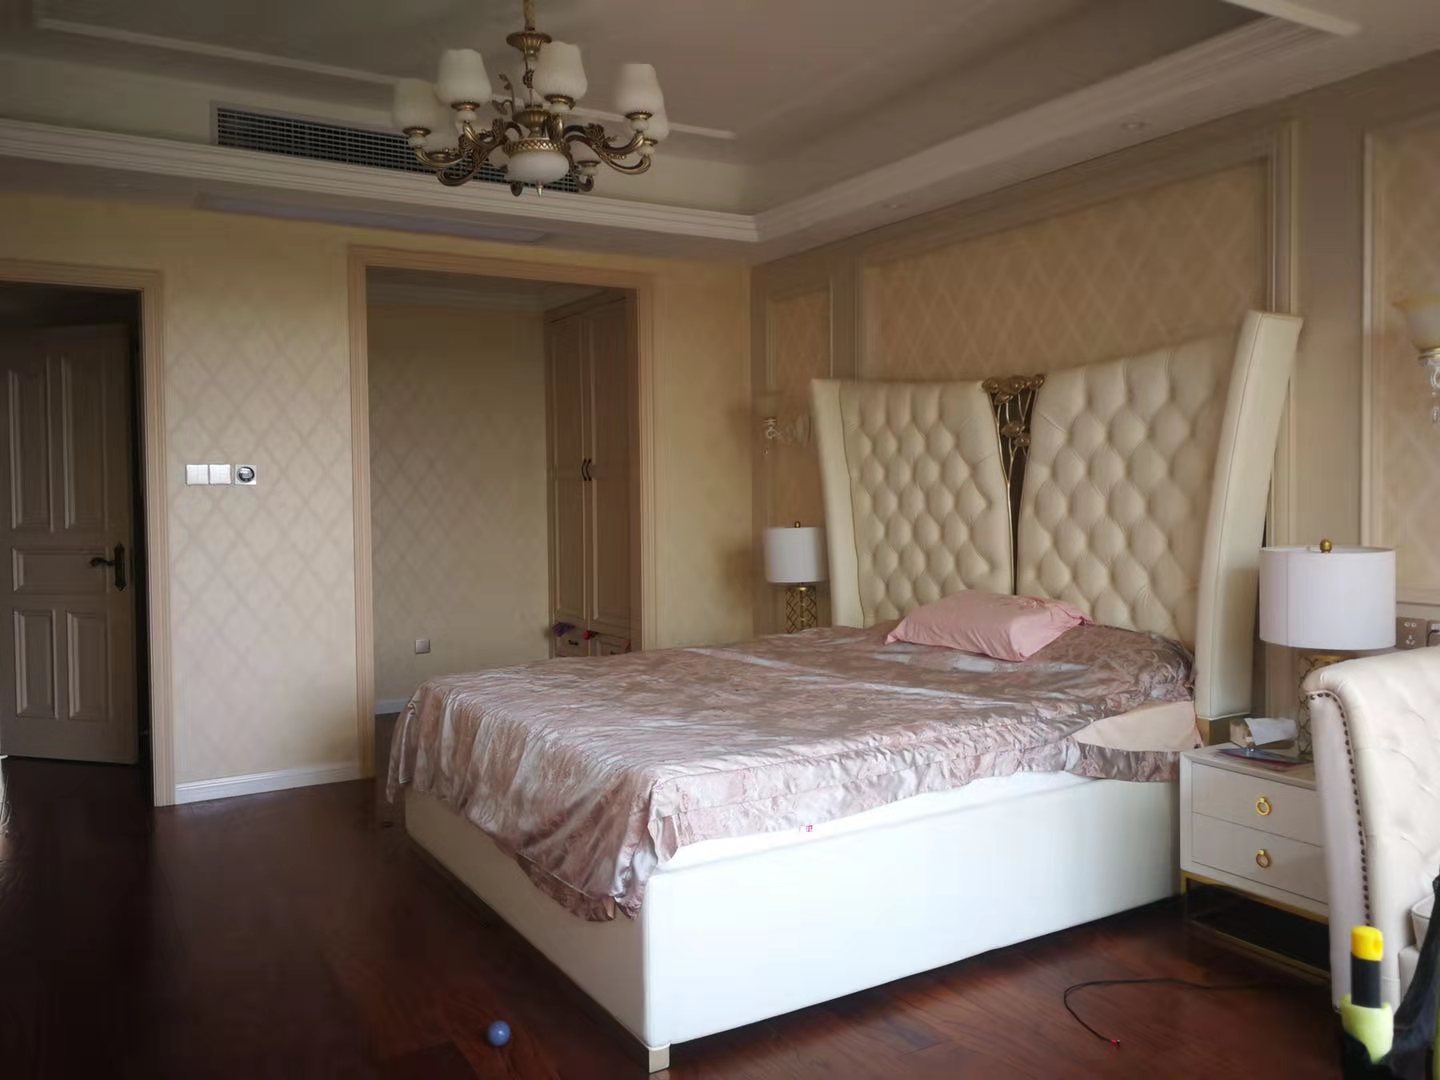 Maid's Room